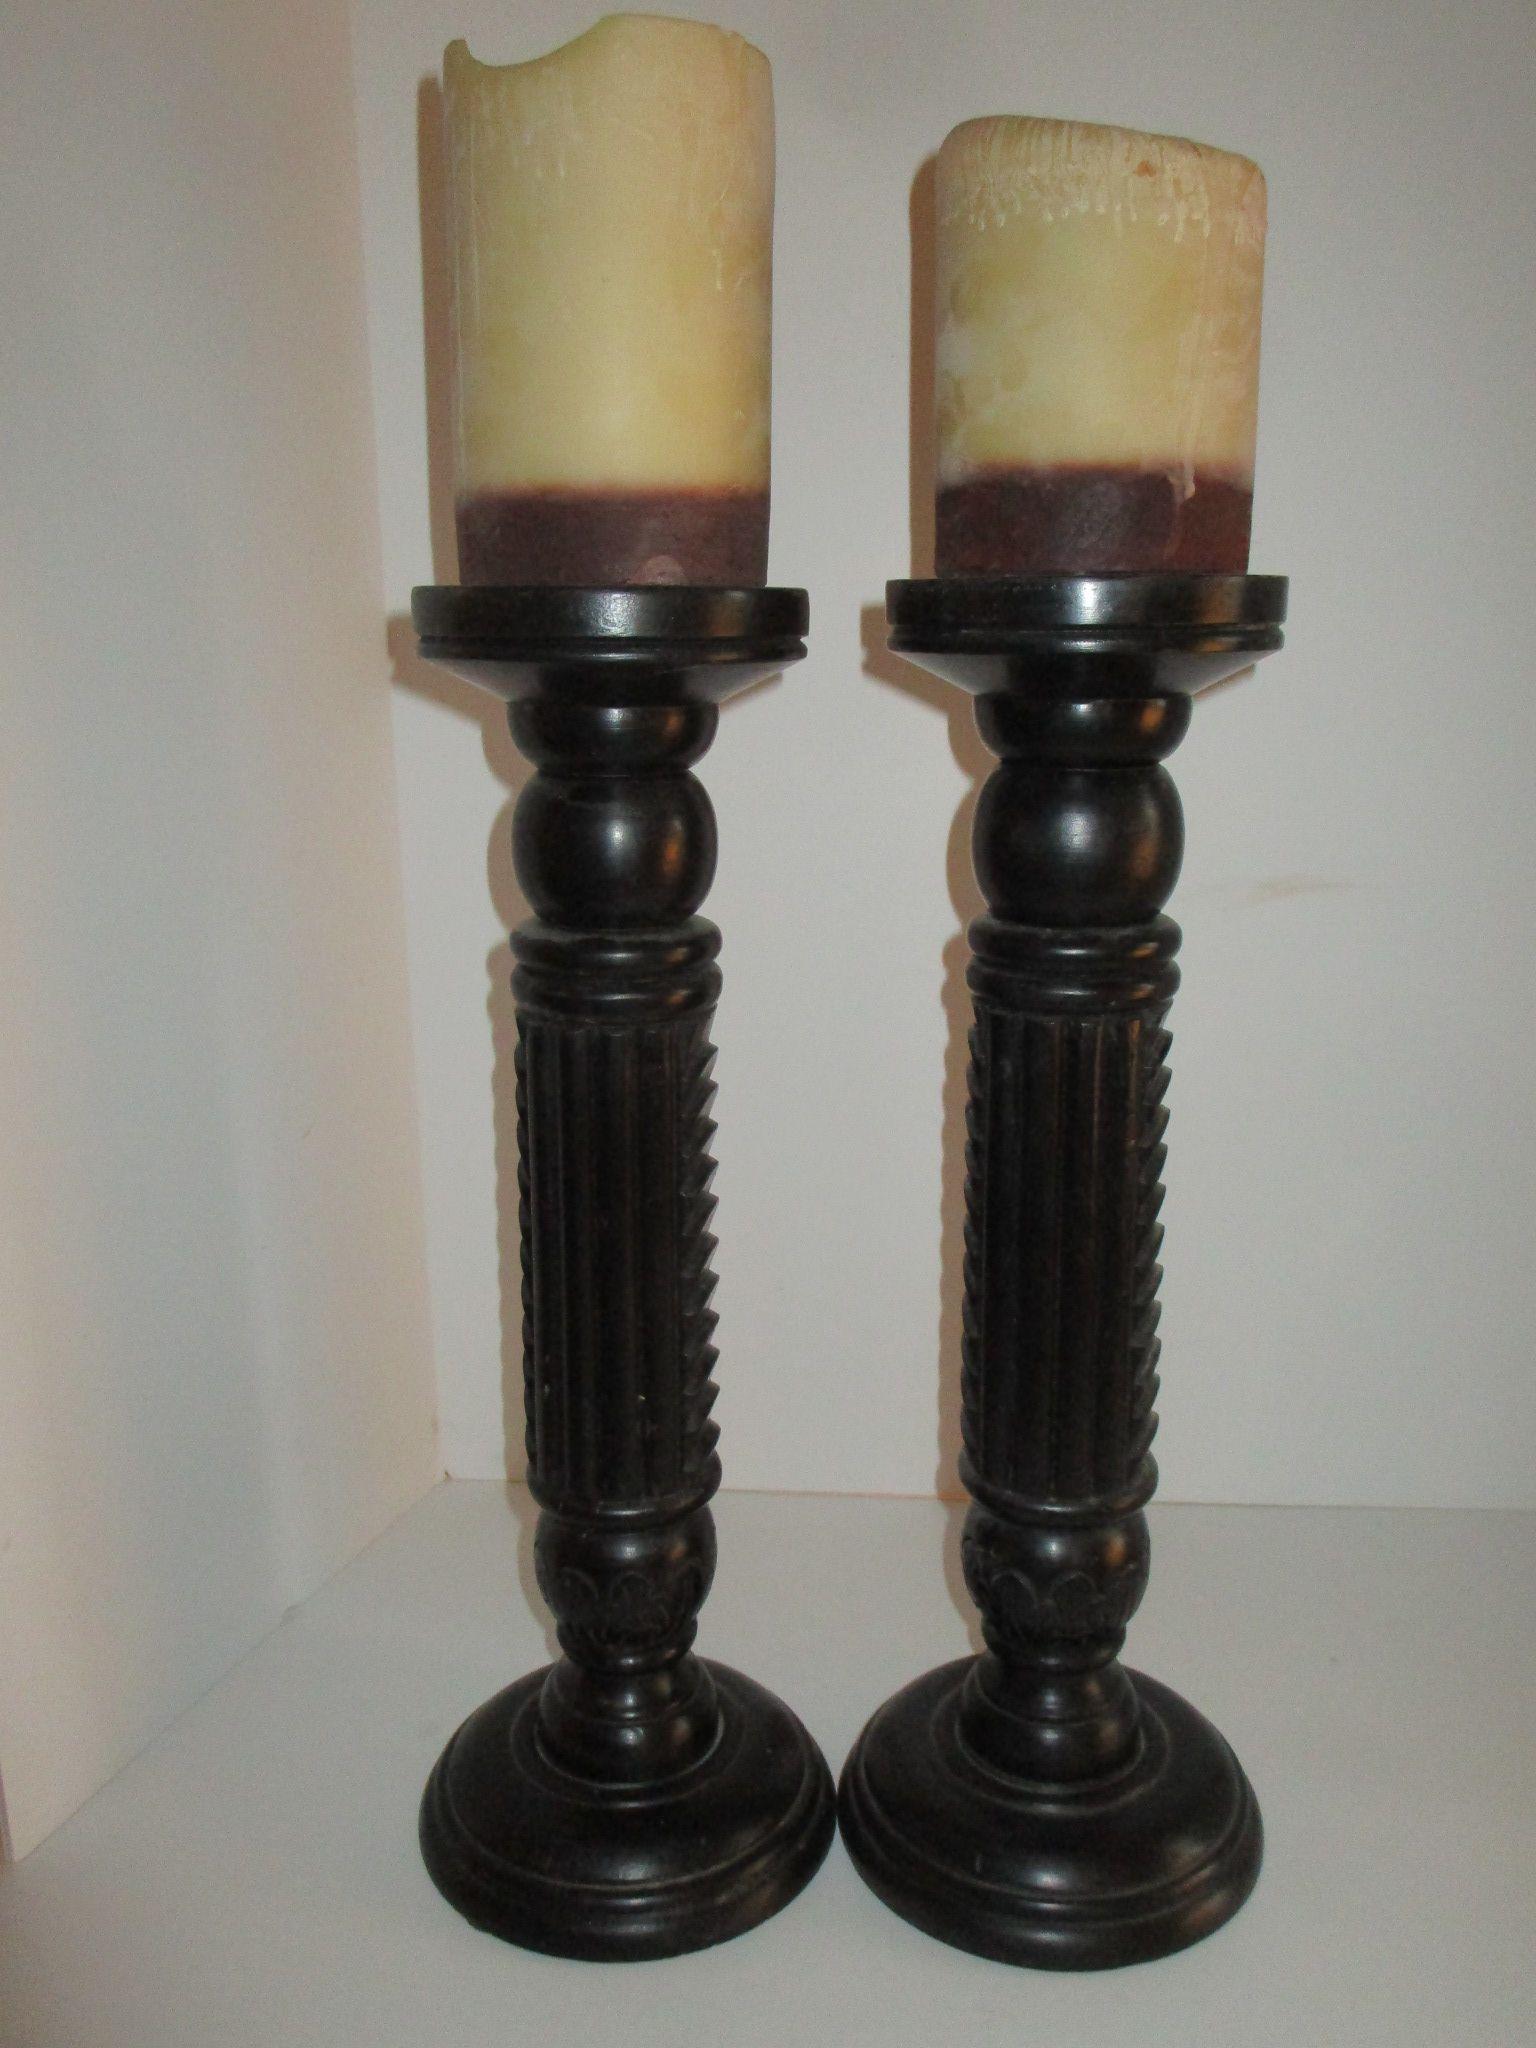 Pair 17" Nate Berkus Rosewood Candlesticks w/ Candles, Made in India